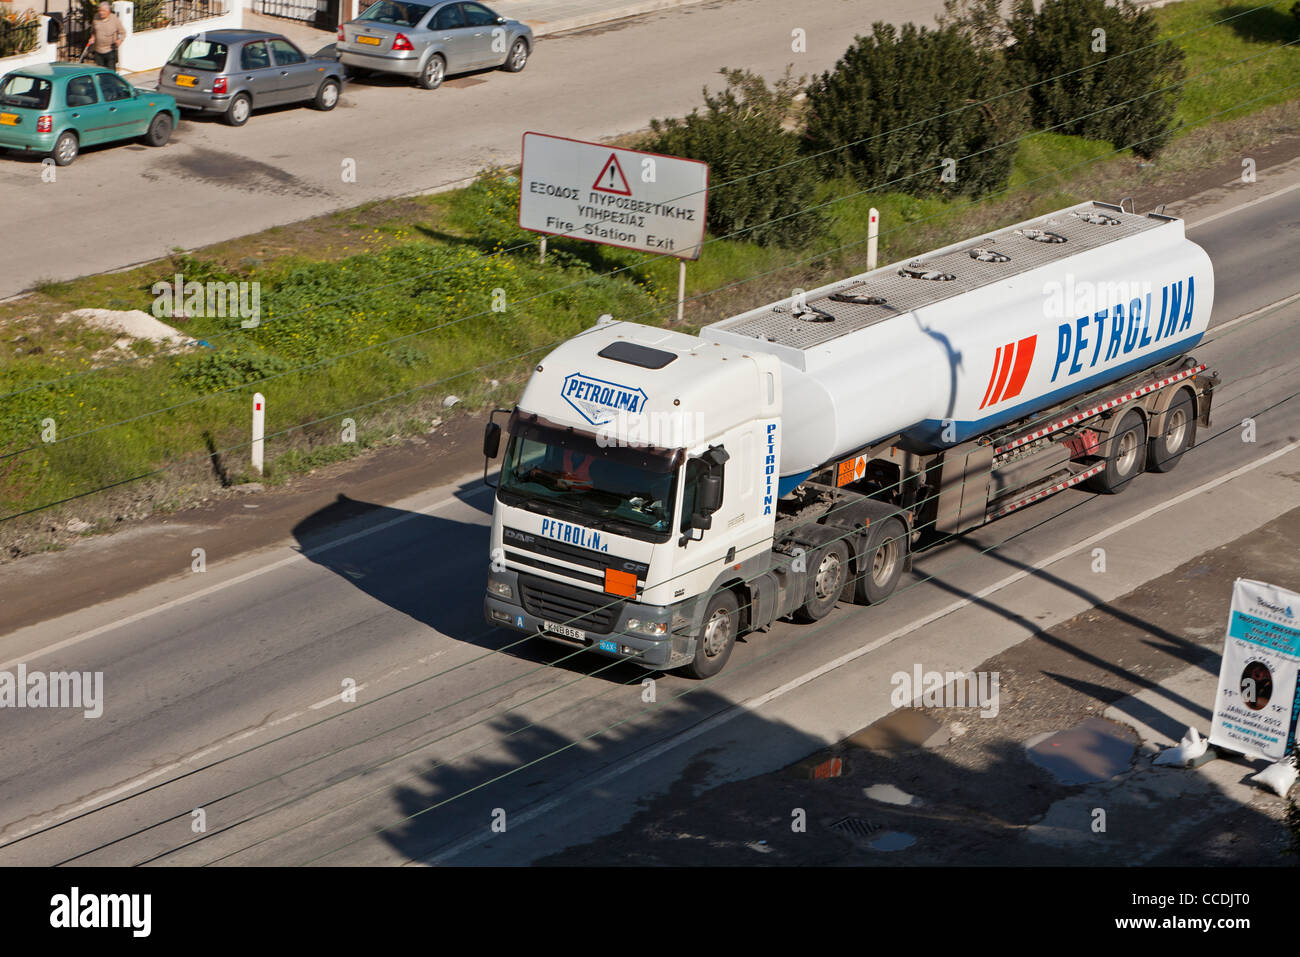 Petrolina fuel truck Larnaca Cyprus petroleum oil Stock Photo